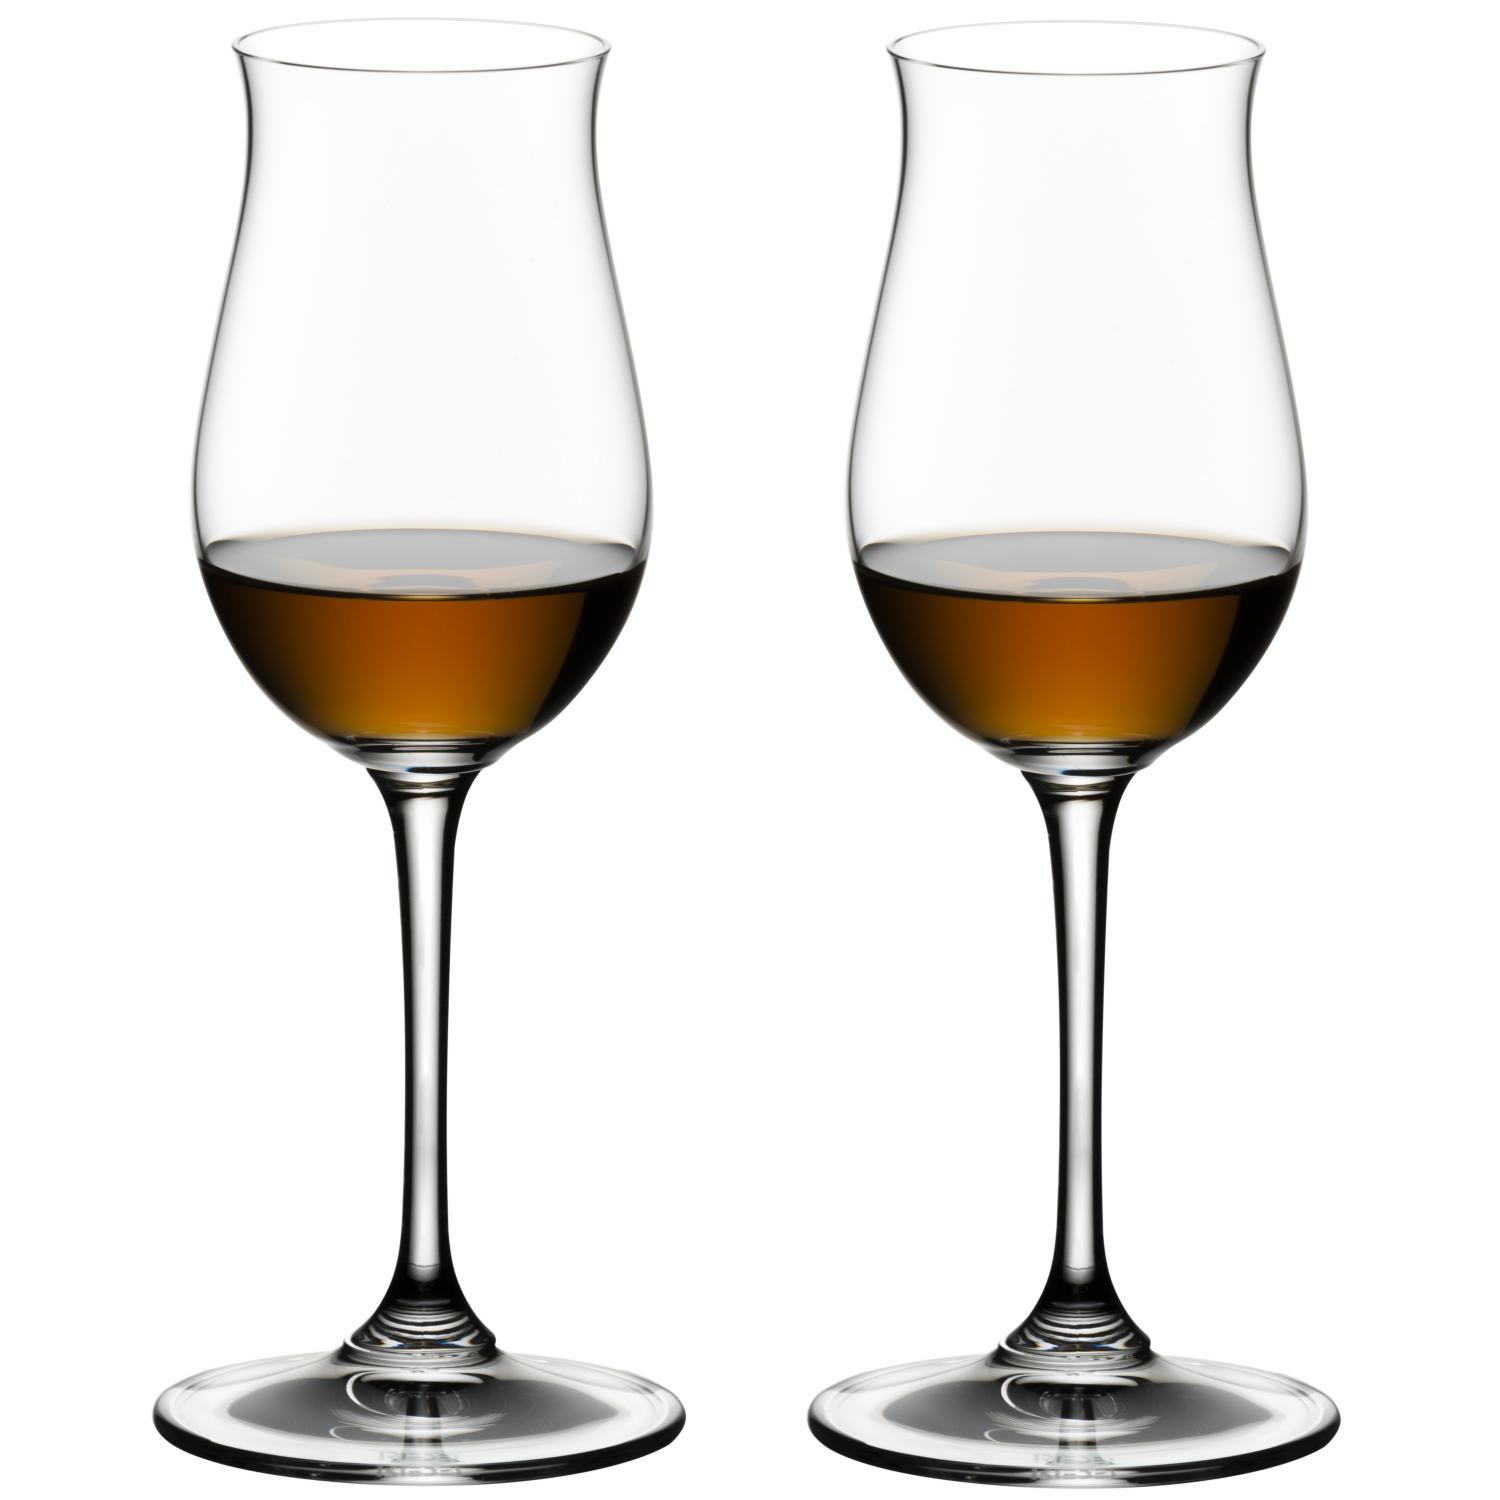 2 бокала для коньяка RIEDEL Vinum Cognac Hennessy 170 мл (арт. 6416/71)